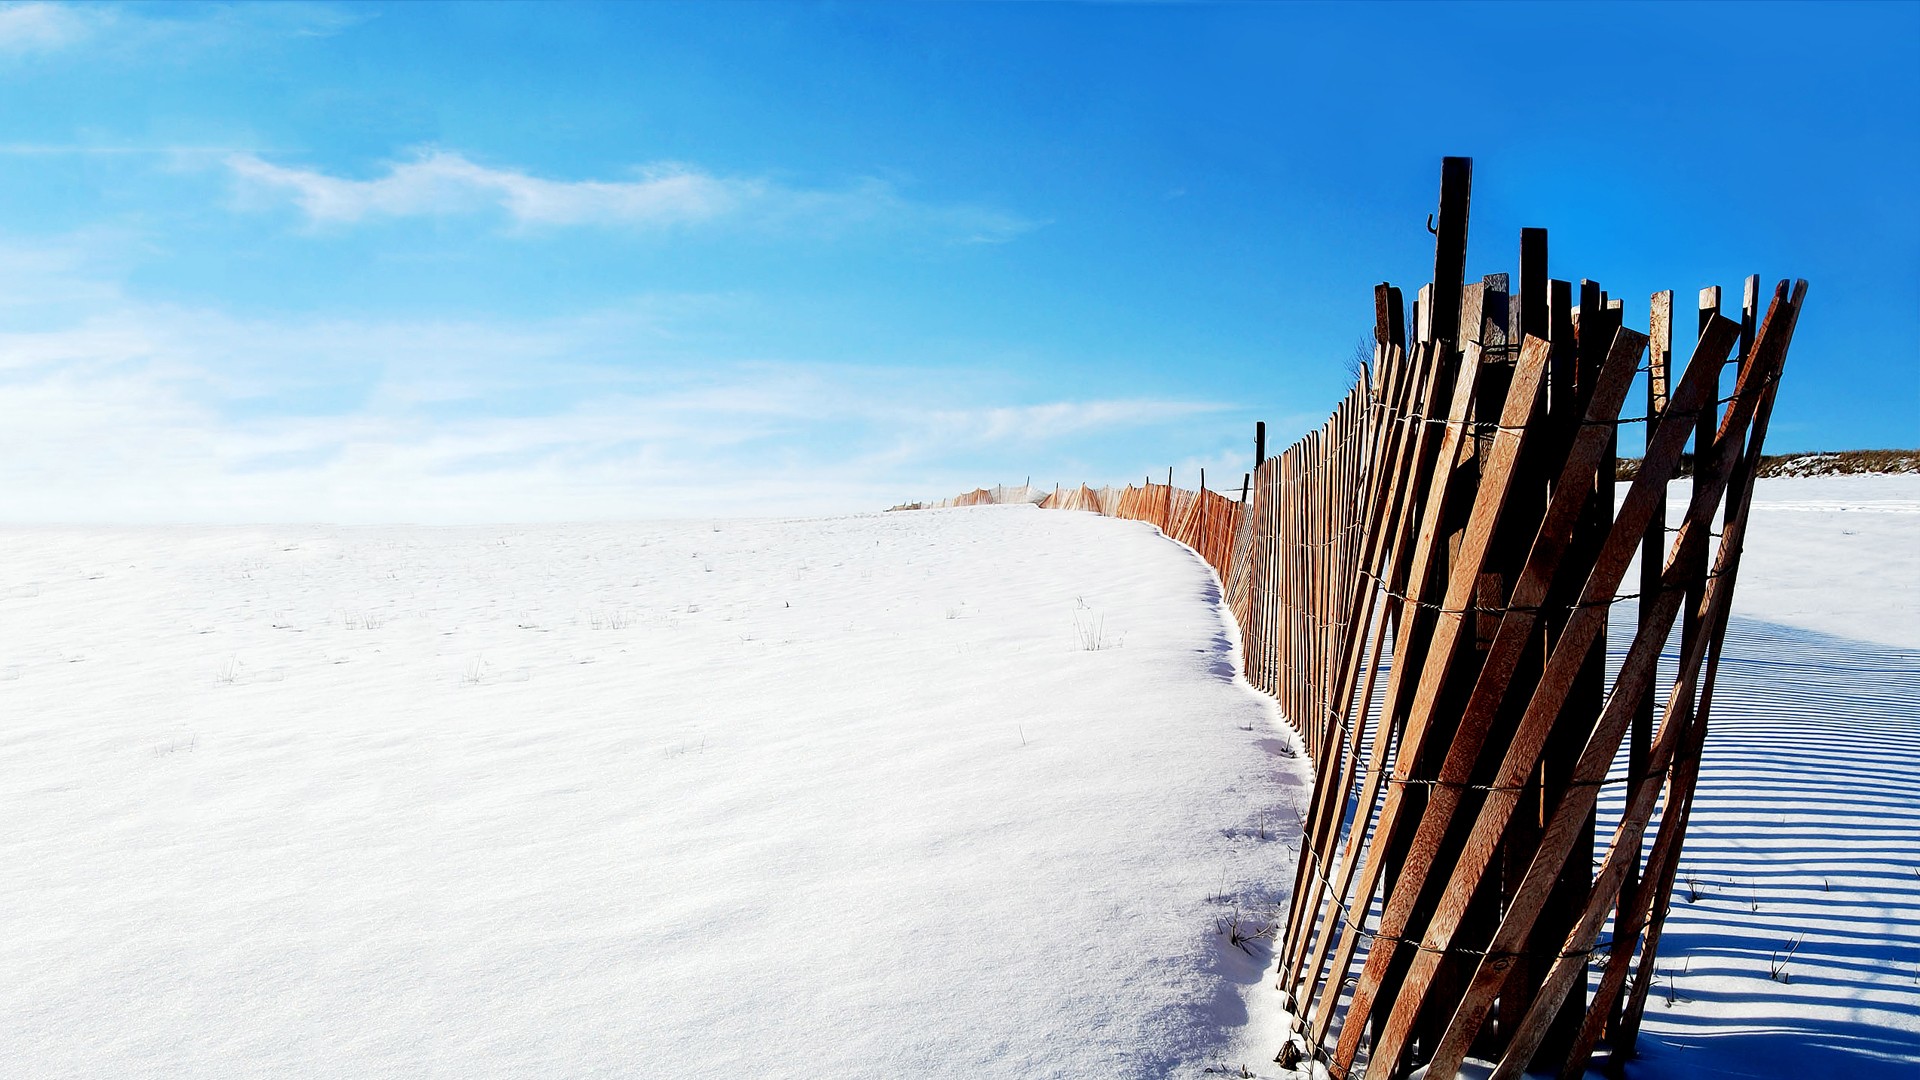 General 1920x1080 fence planks snow winter landscape field outdoors